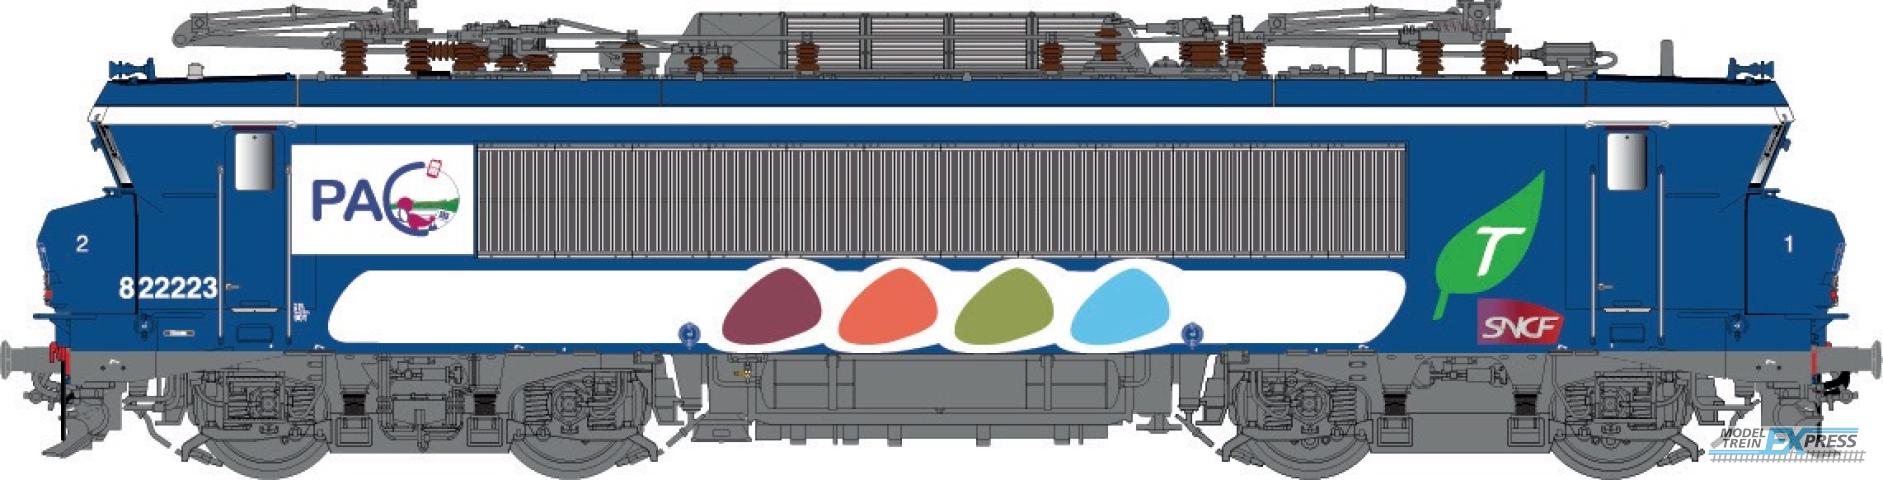 LS Models 11555 BB 22223, blauw, carmillon logo, Transilien, front nummer, kleine cabine  /  Ep. VI  /  SNCF  /  HO  /  AC  /  1 P.